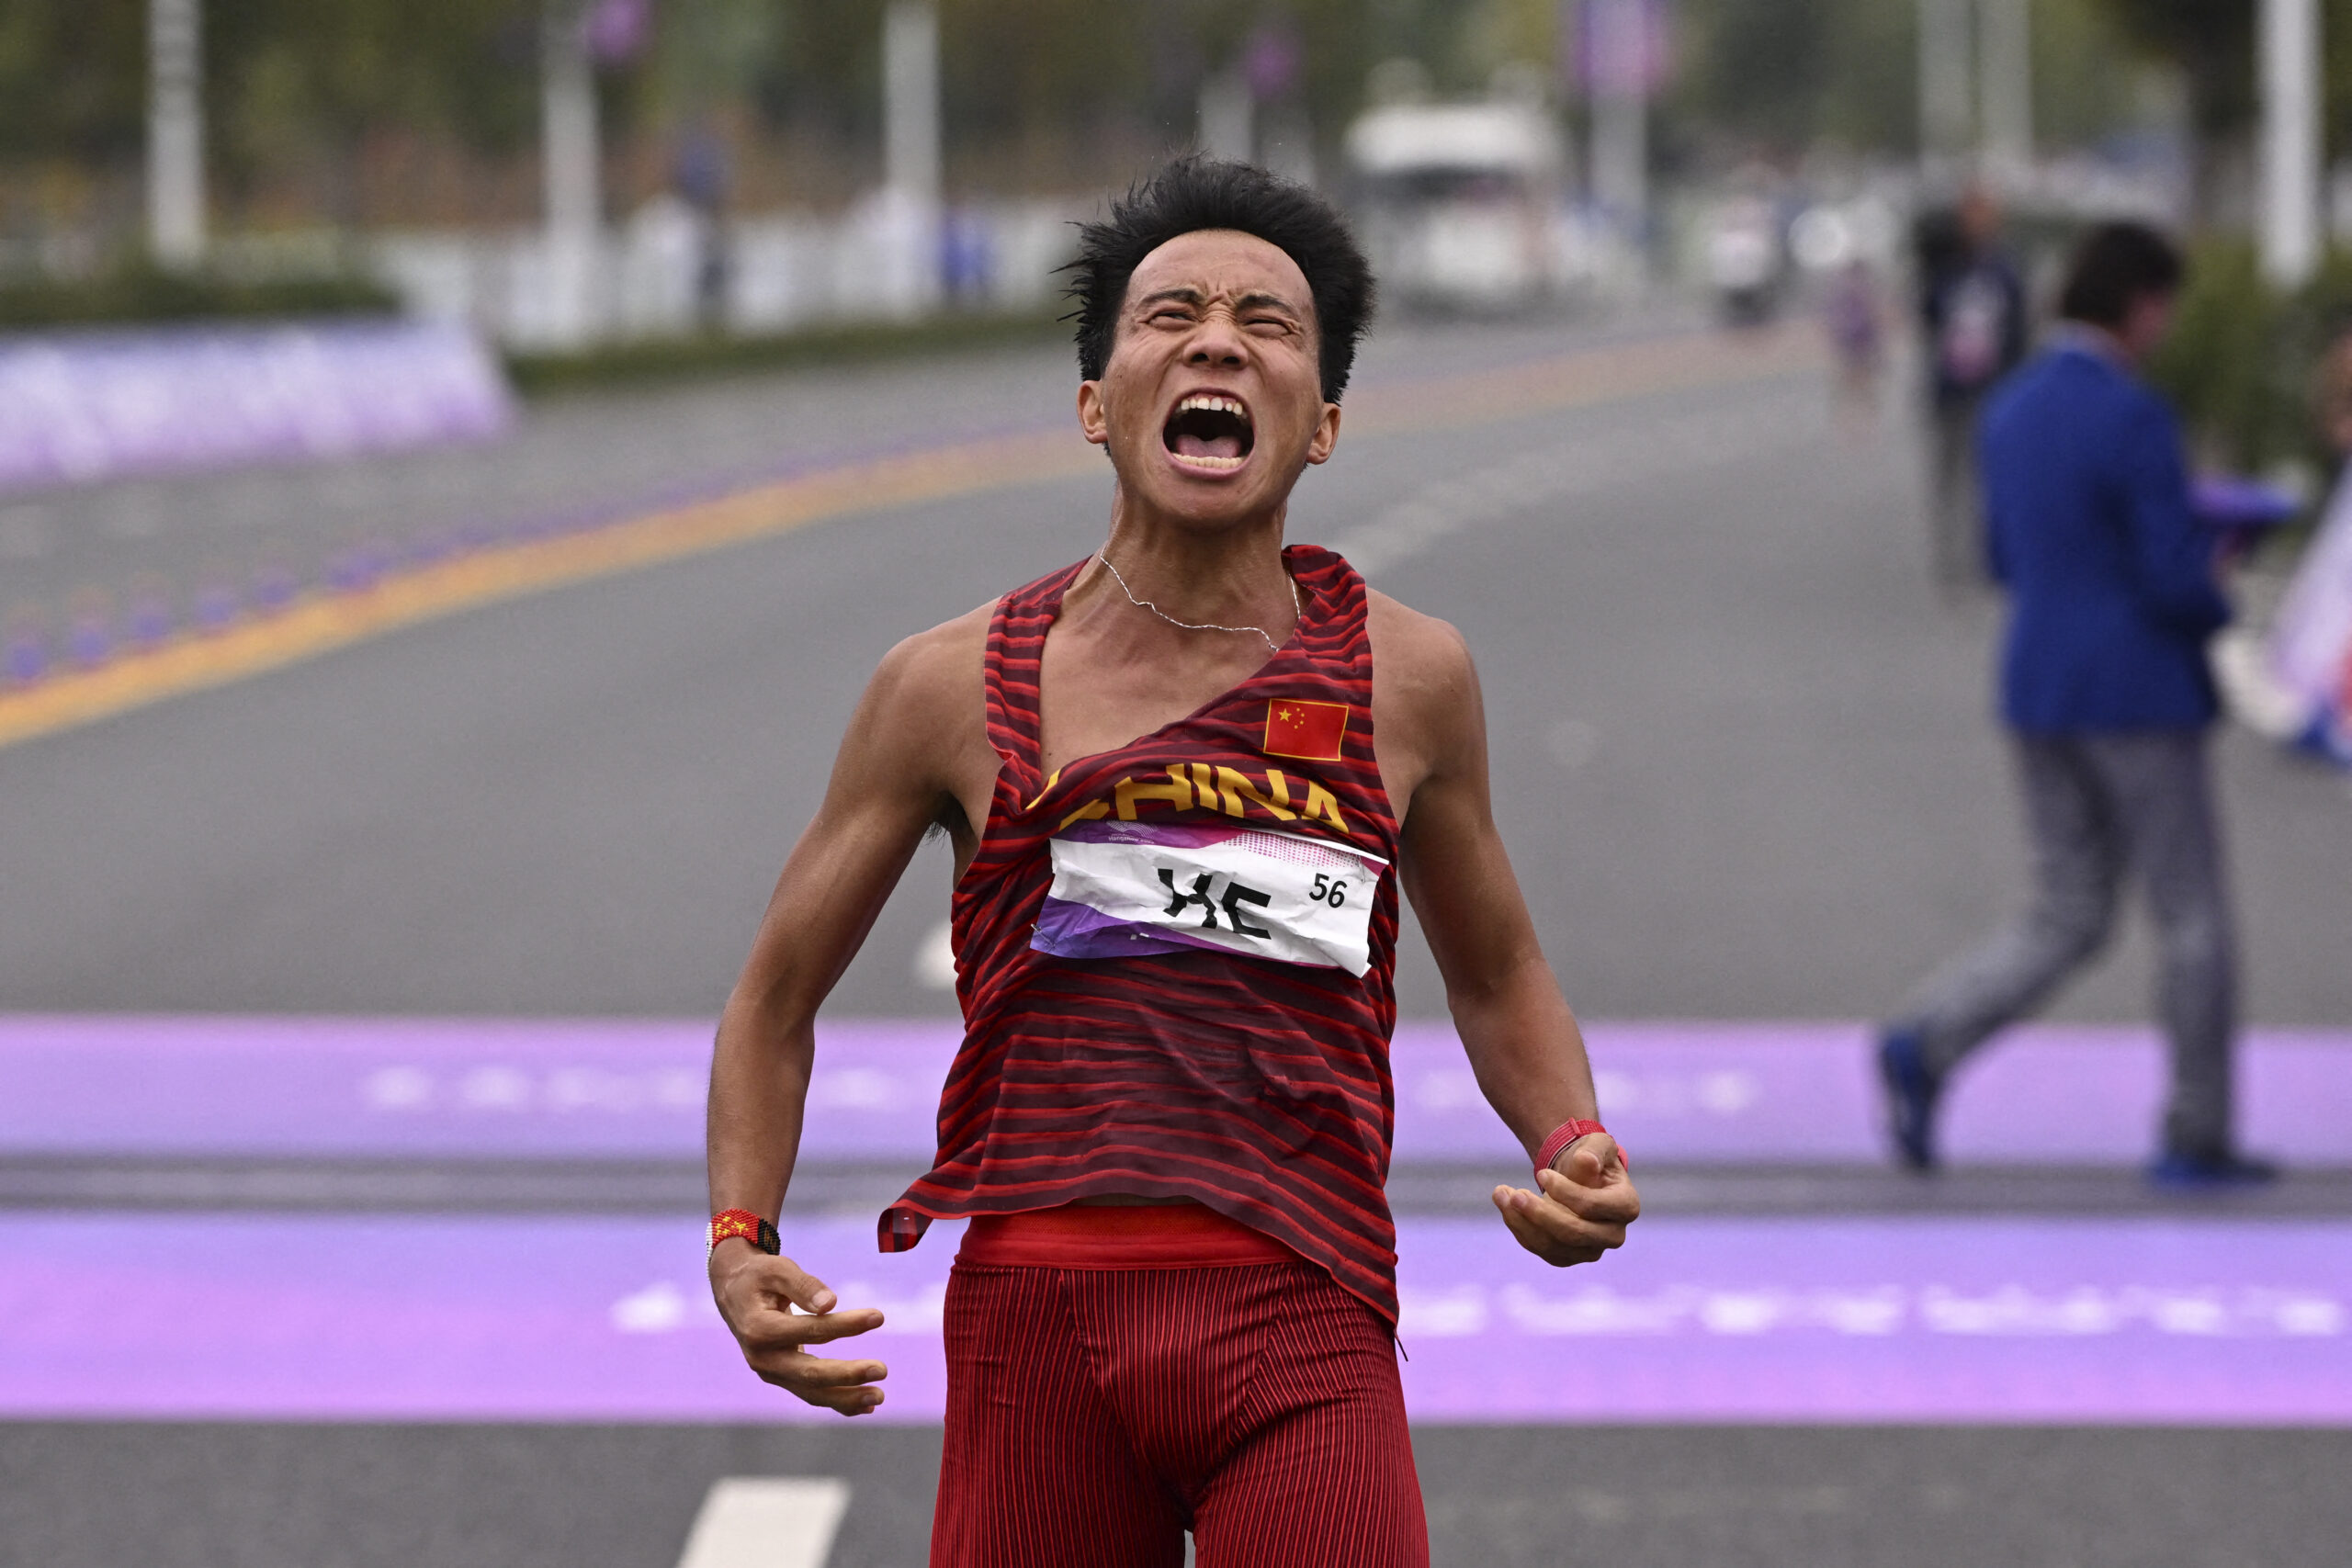 China runner He Jie half marathon scandal